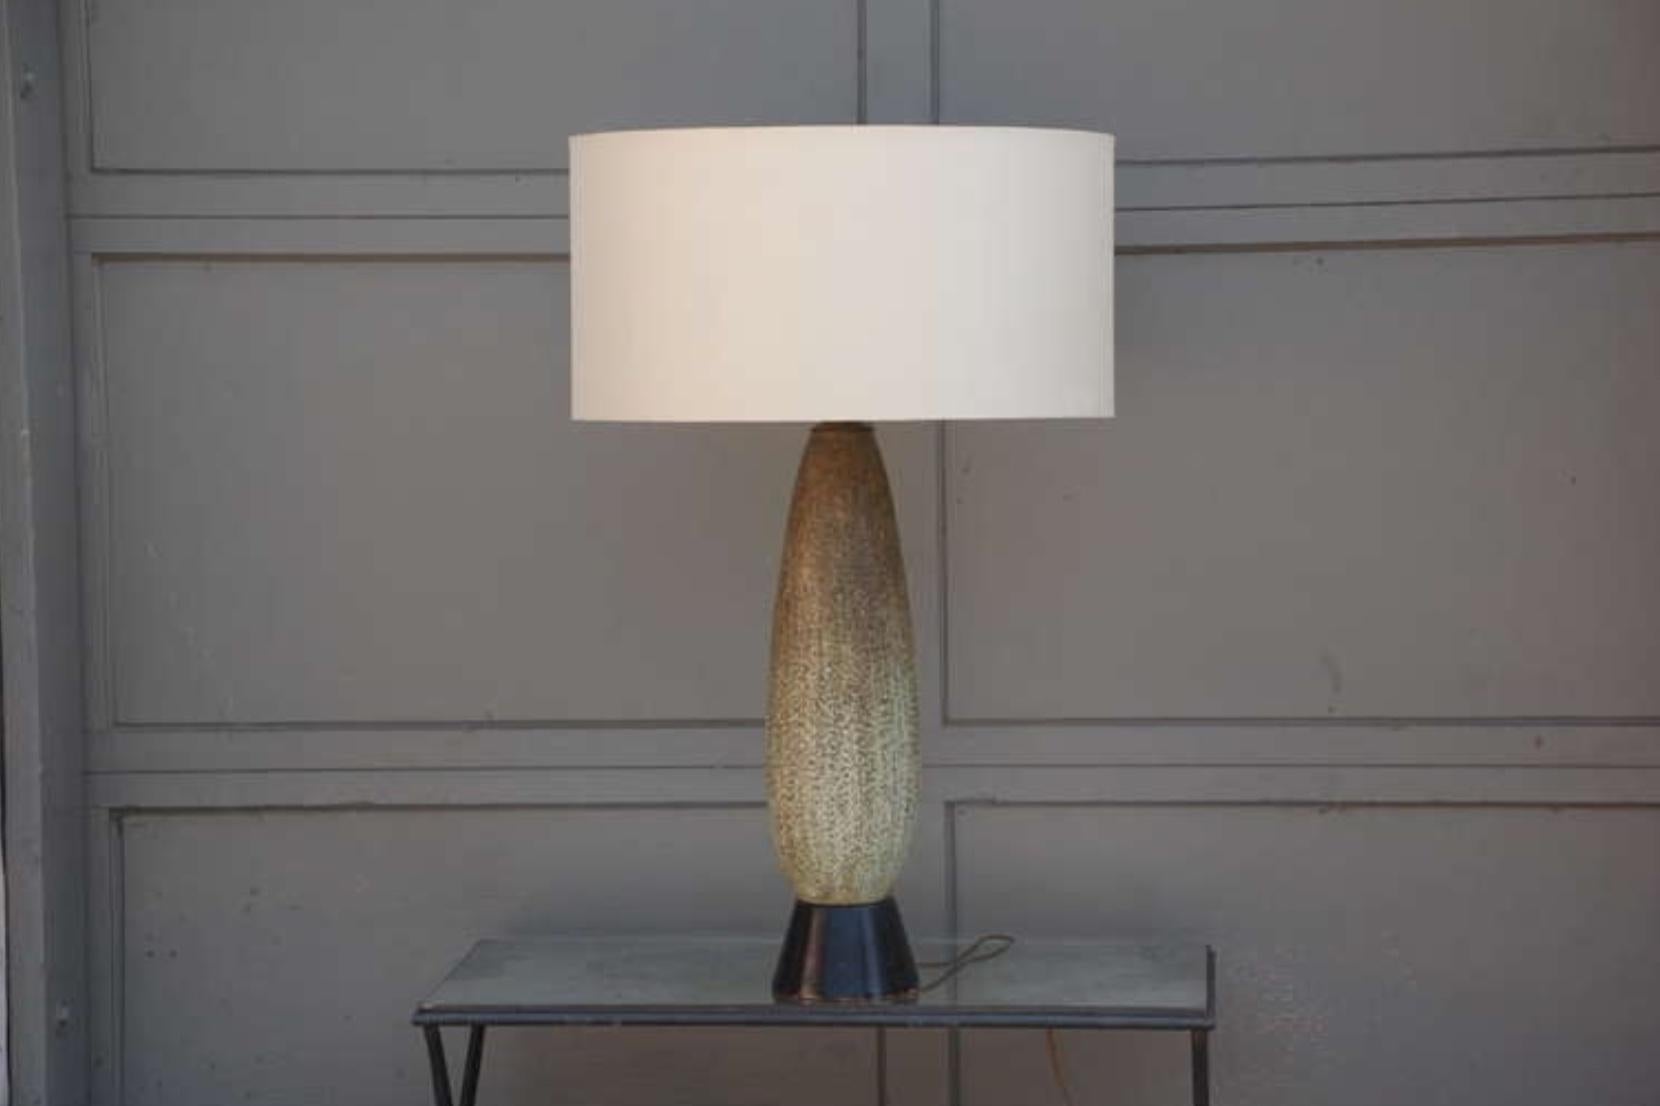 Chic heavy Studio ceramic oblong lamp. Rewired.

Shade dimensions: 11 in. tall x 22 in. diameter.